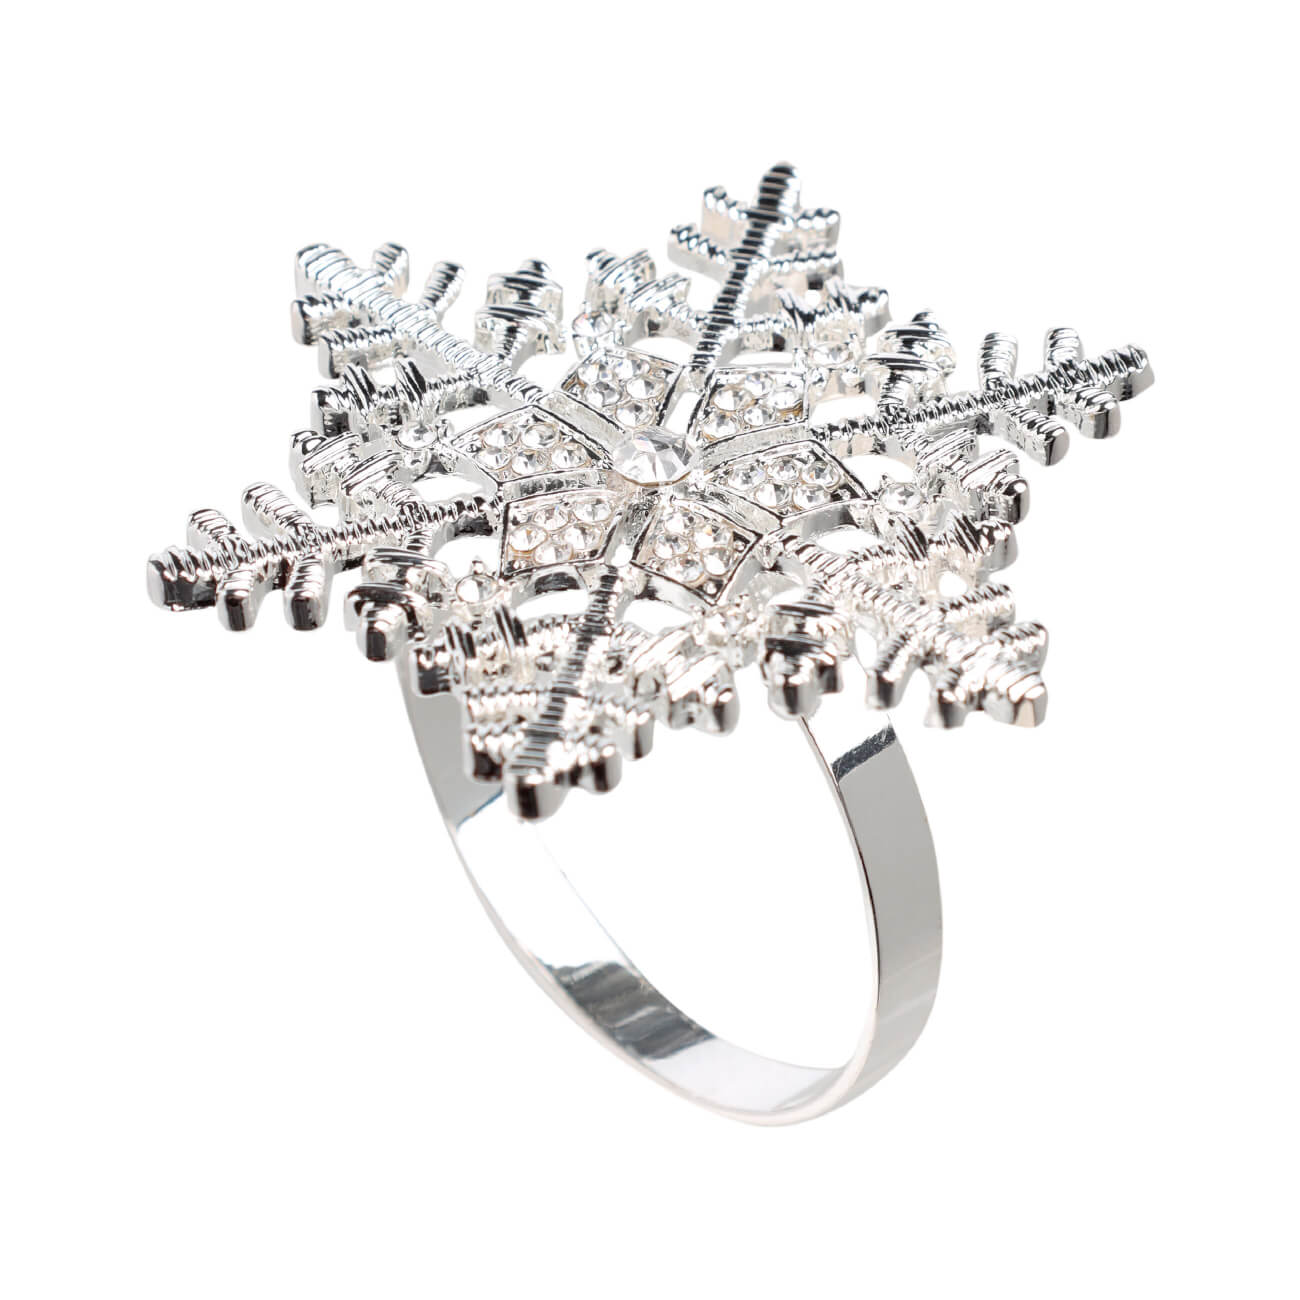 кольцо для салфеток 6 см металл серебристое ветка с листьями print Кольцо для салфеток, 5 см, металл, серебристое, Снежинка, Snowfall